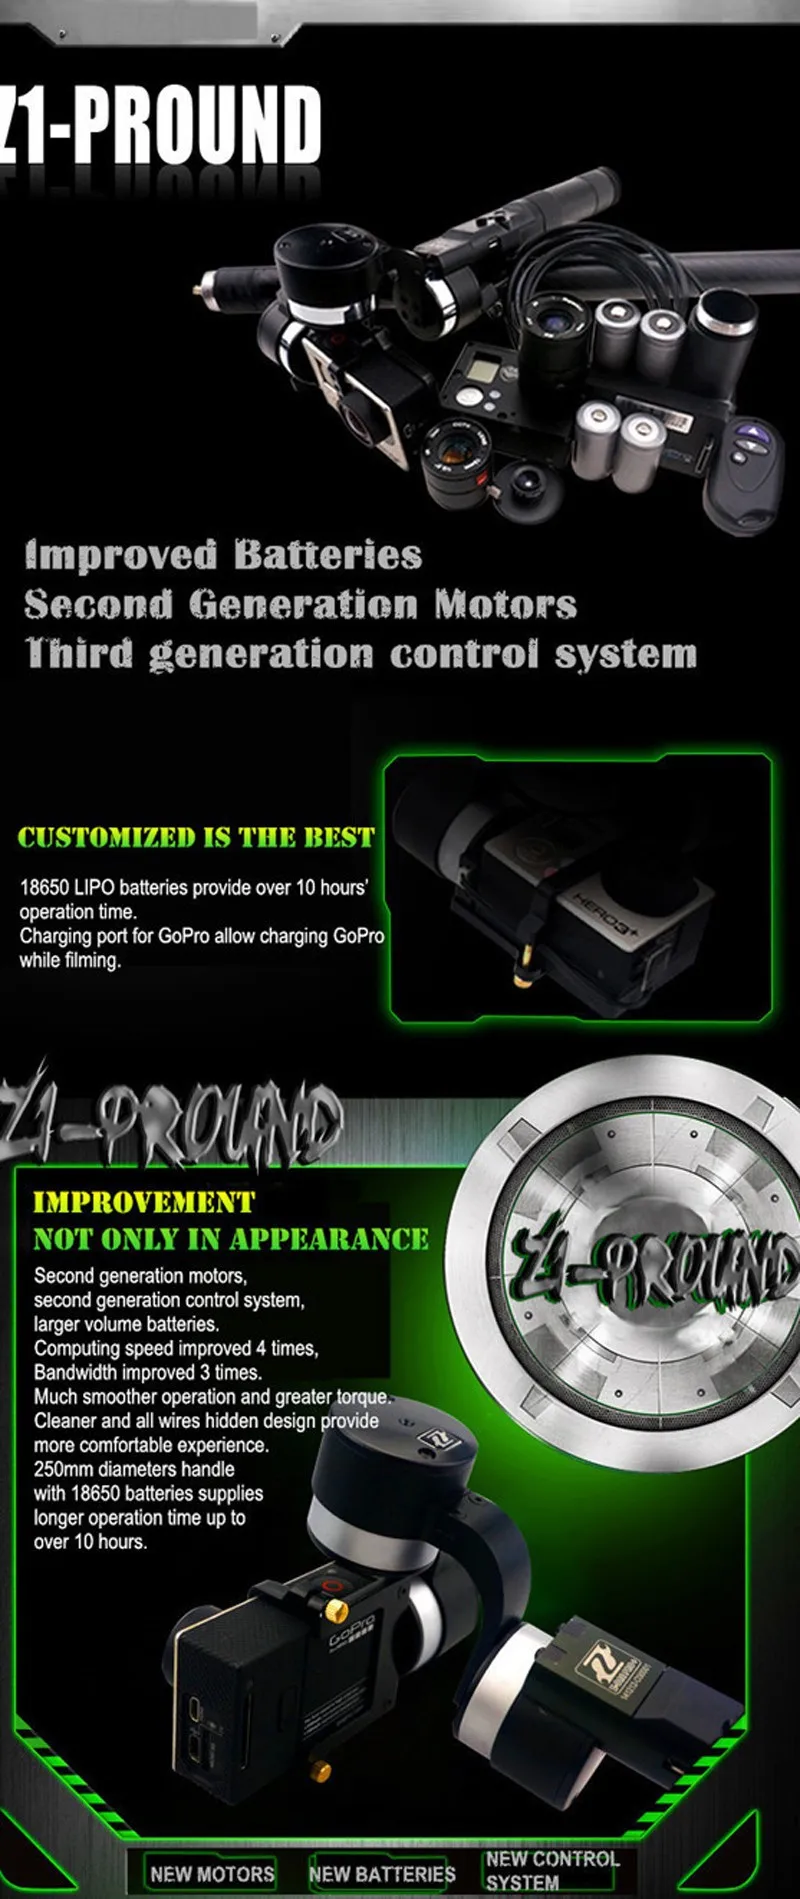 Z-one Pround 3 Axis Handheld brushless gimbal Steady Gimbal For Gopro Hero 3 3+ 4 SJ400 Action camera PK Feiyu G4 gimbal rc